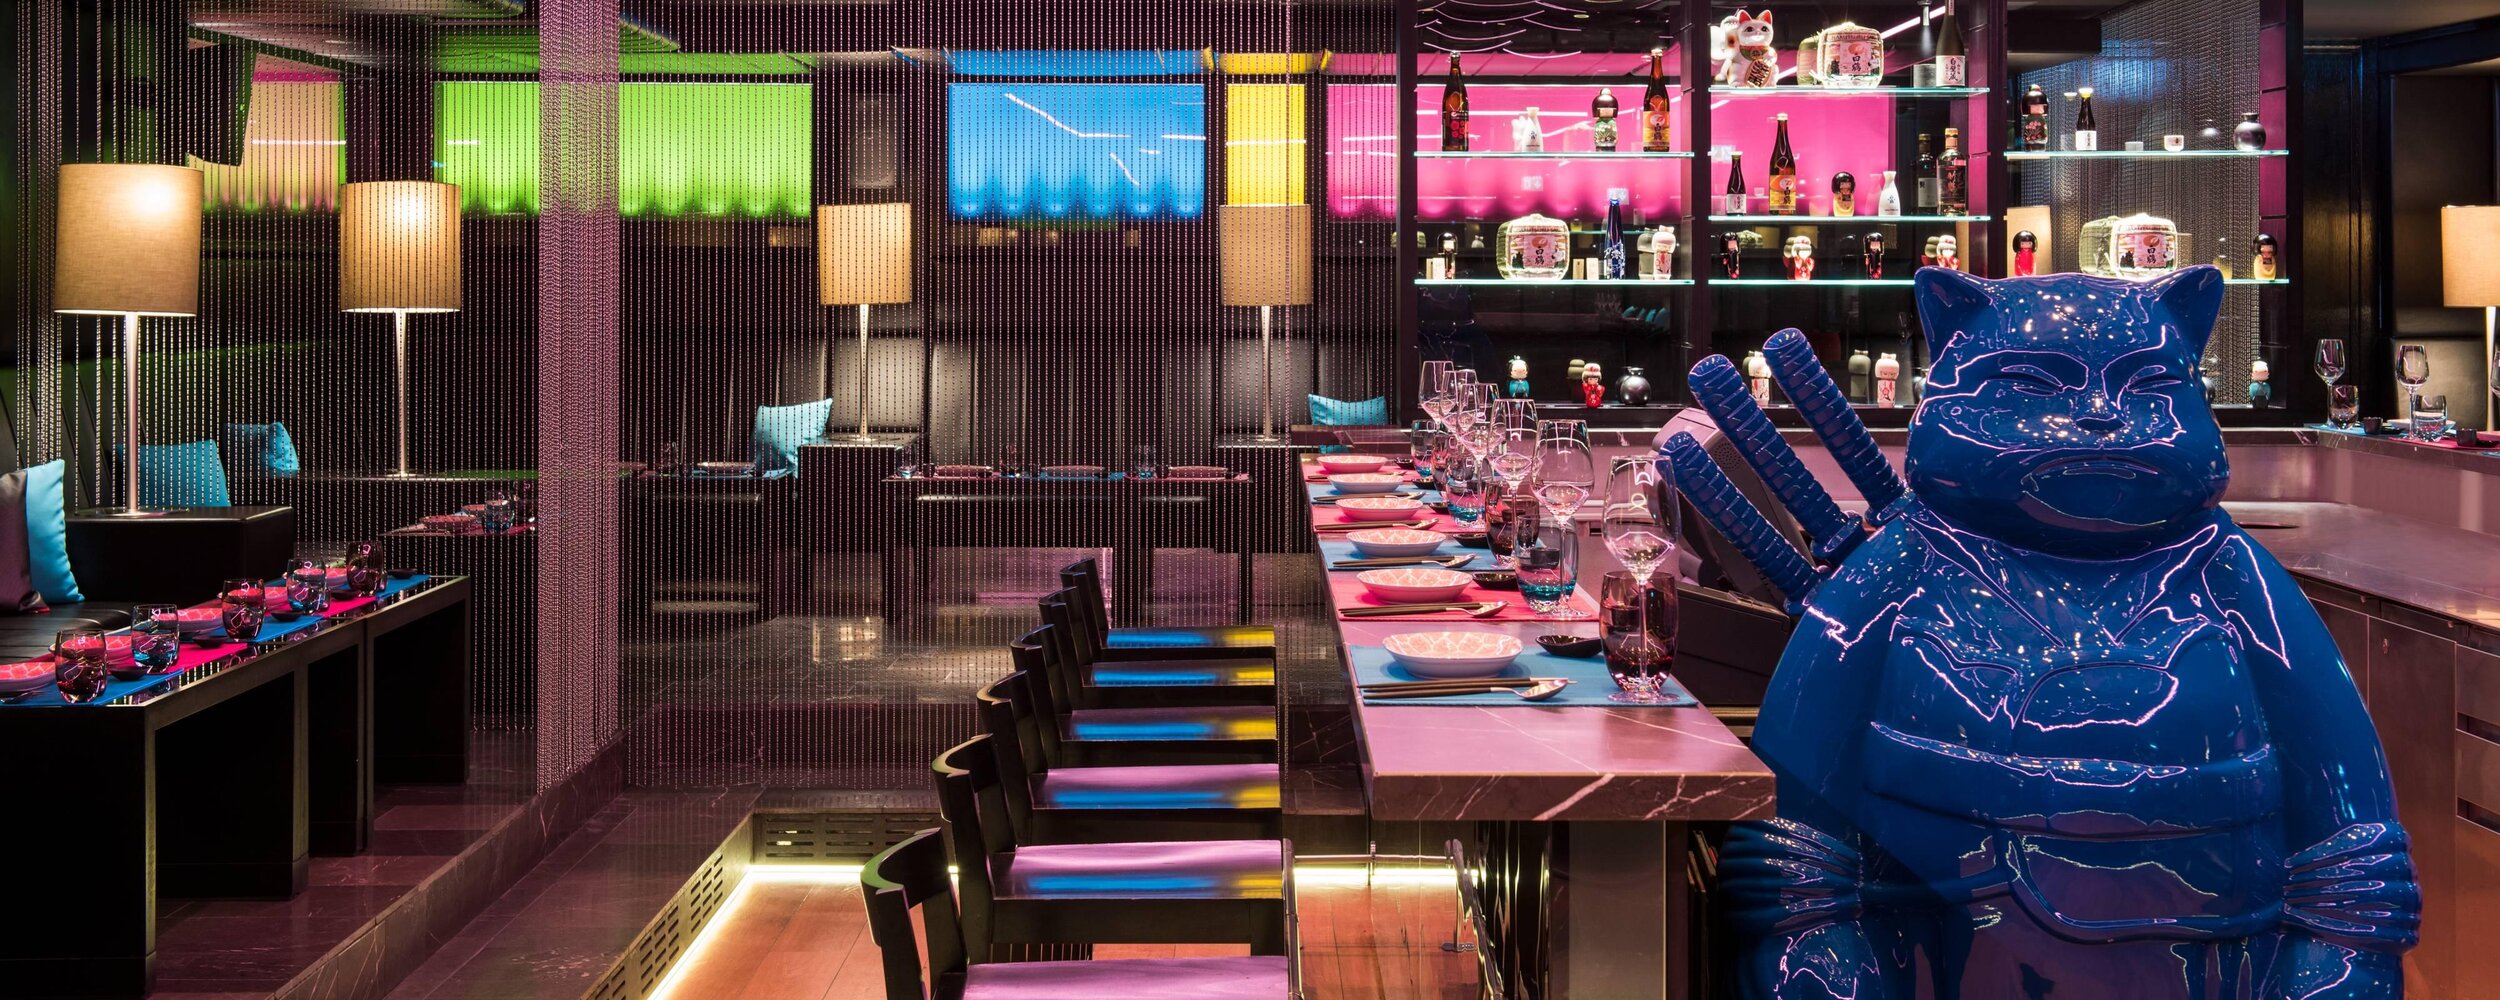 Carve-Sushi-bar-and-Asian-Fusion-verbier-restaurant-Interior-2.jpg